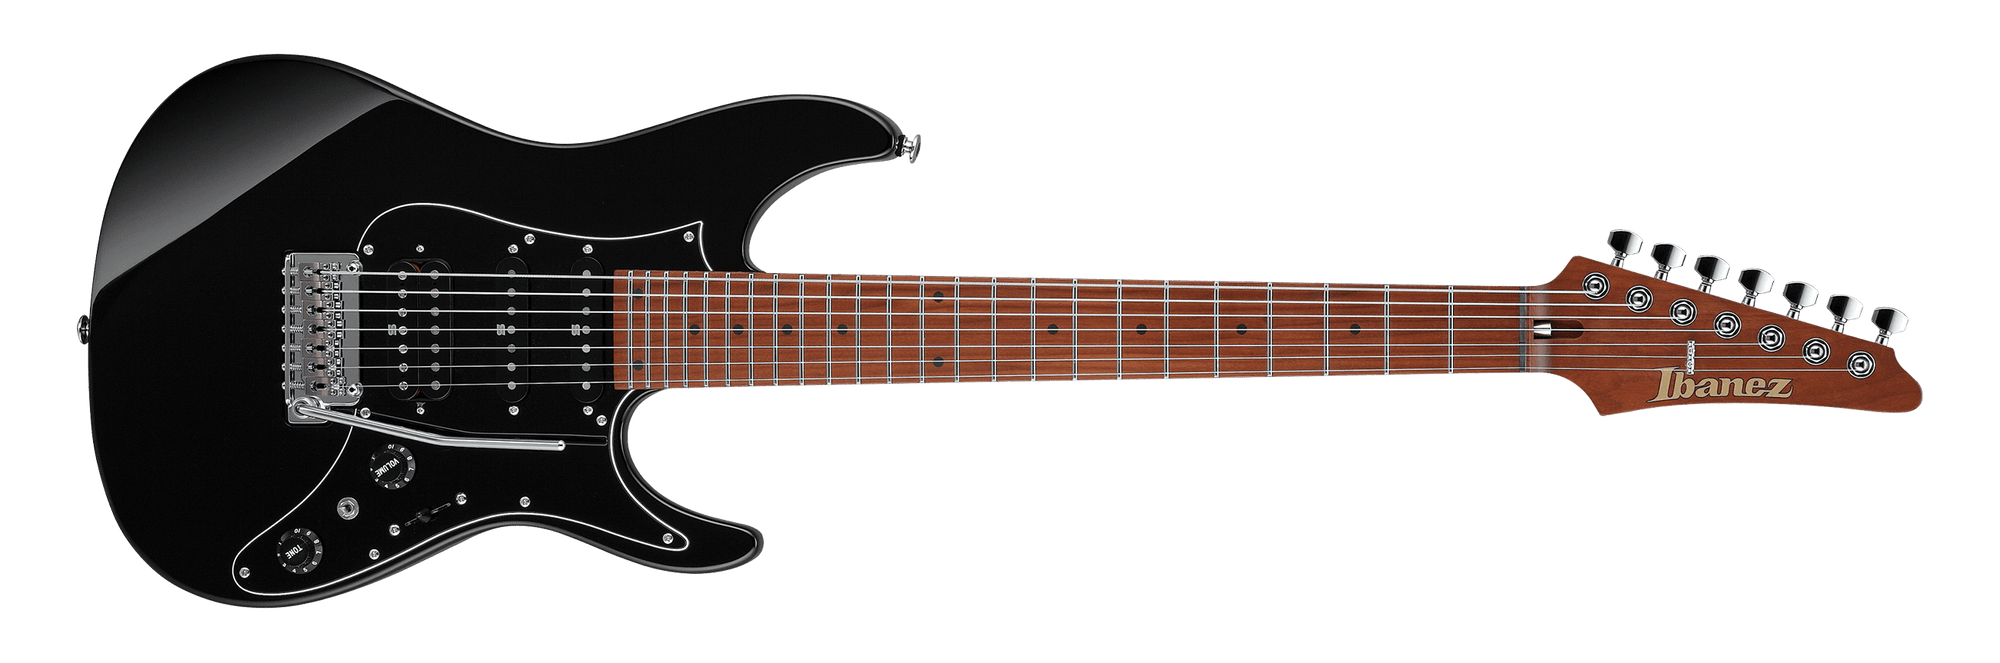 AZ Prestige 7 String Electric Guitar with Case in Black AZ24047BK